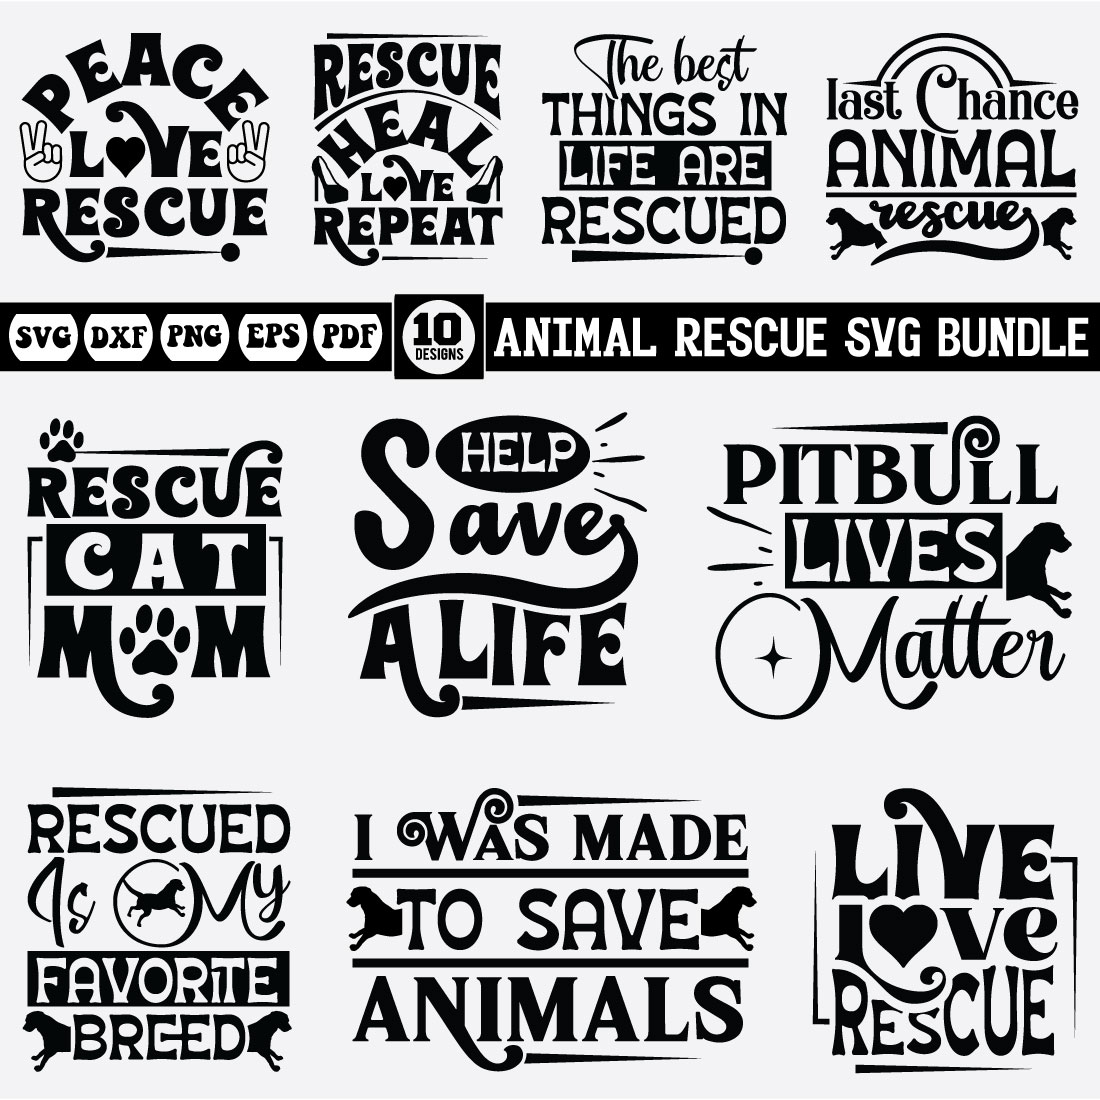 Animal Rescue Svg Bundle preview image.